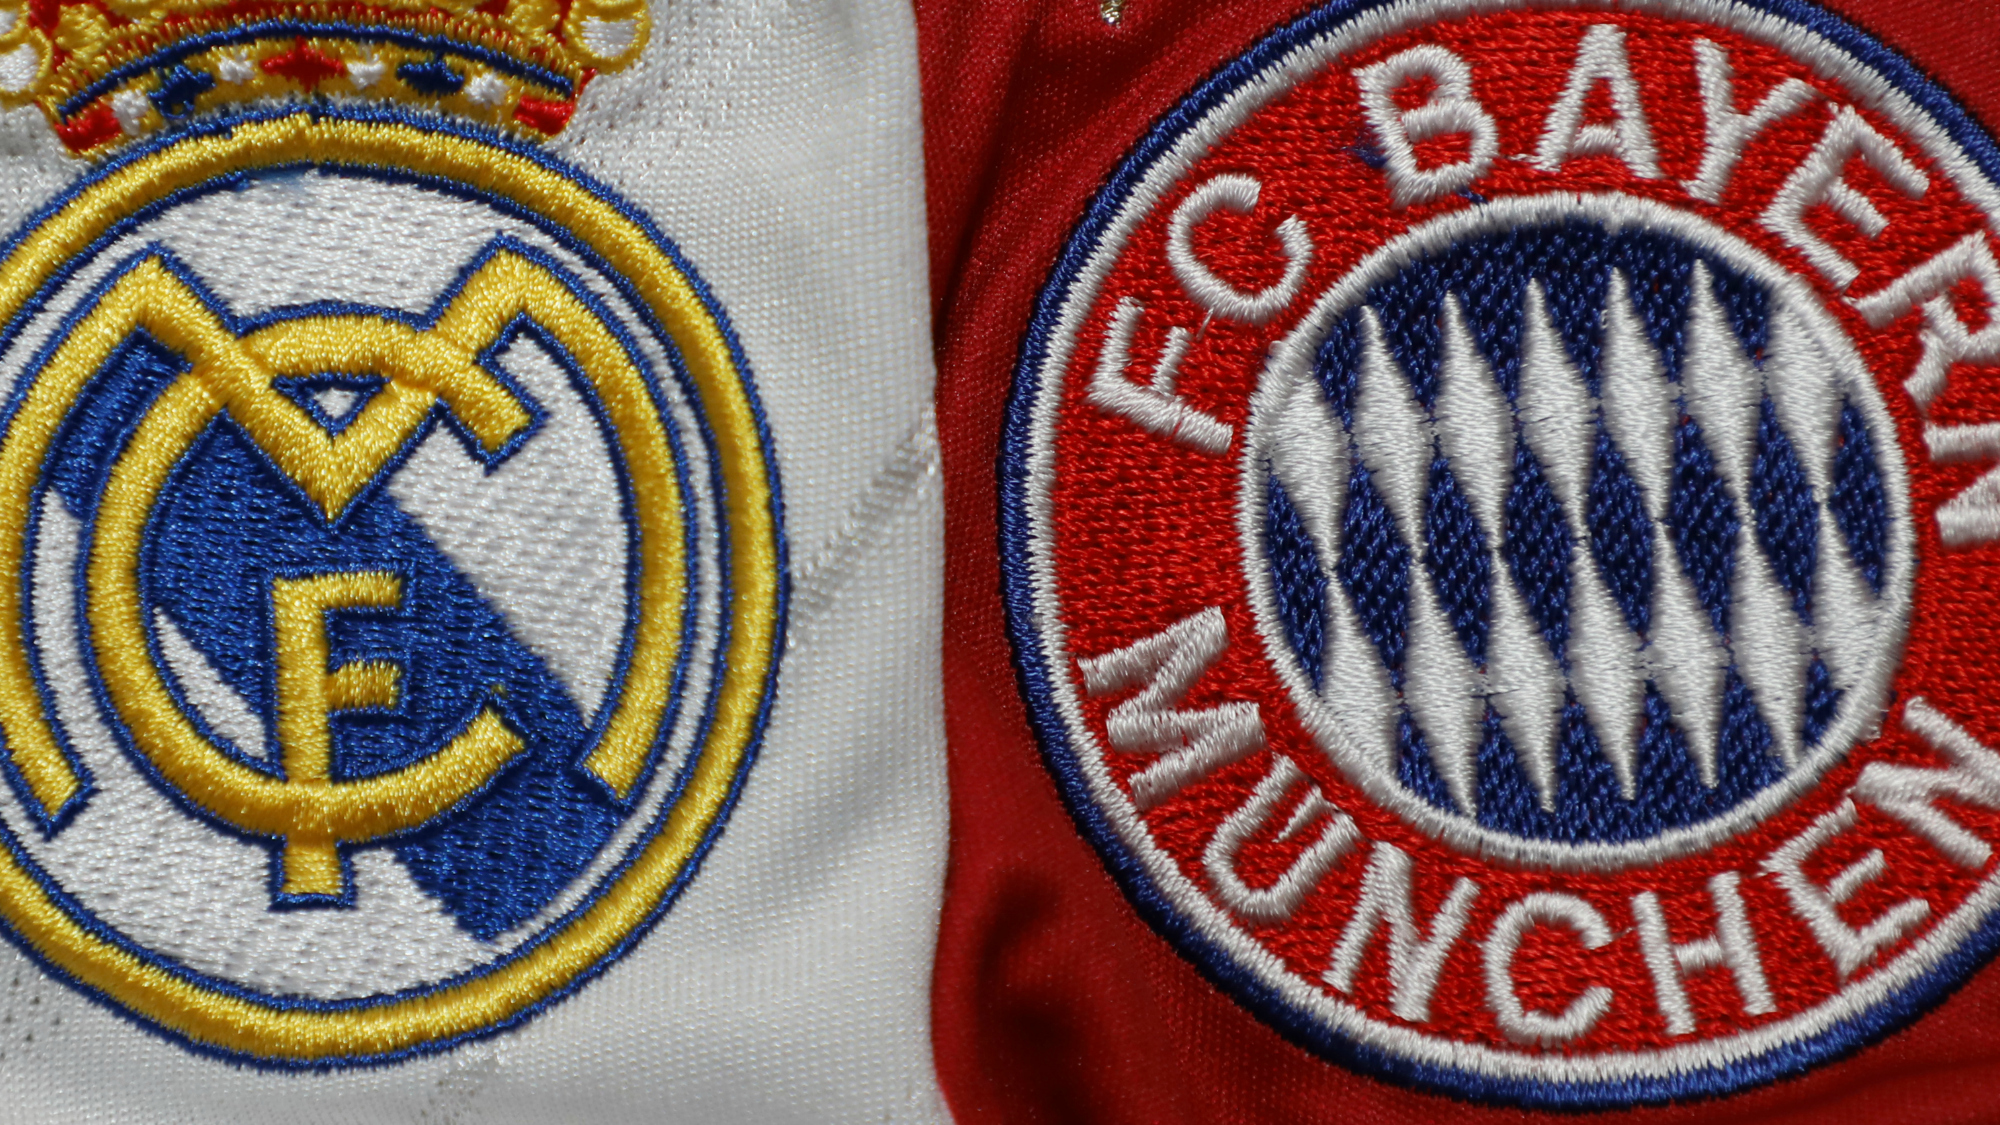 Real Madrid vs Bayern Munich Soccer's Best Rivalry?